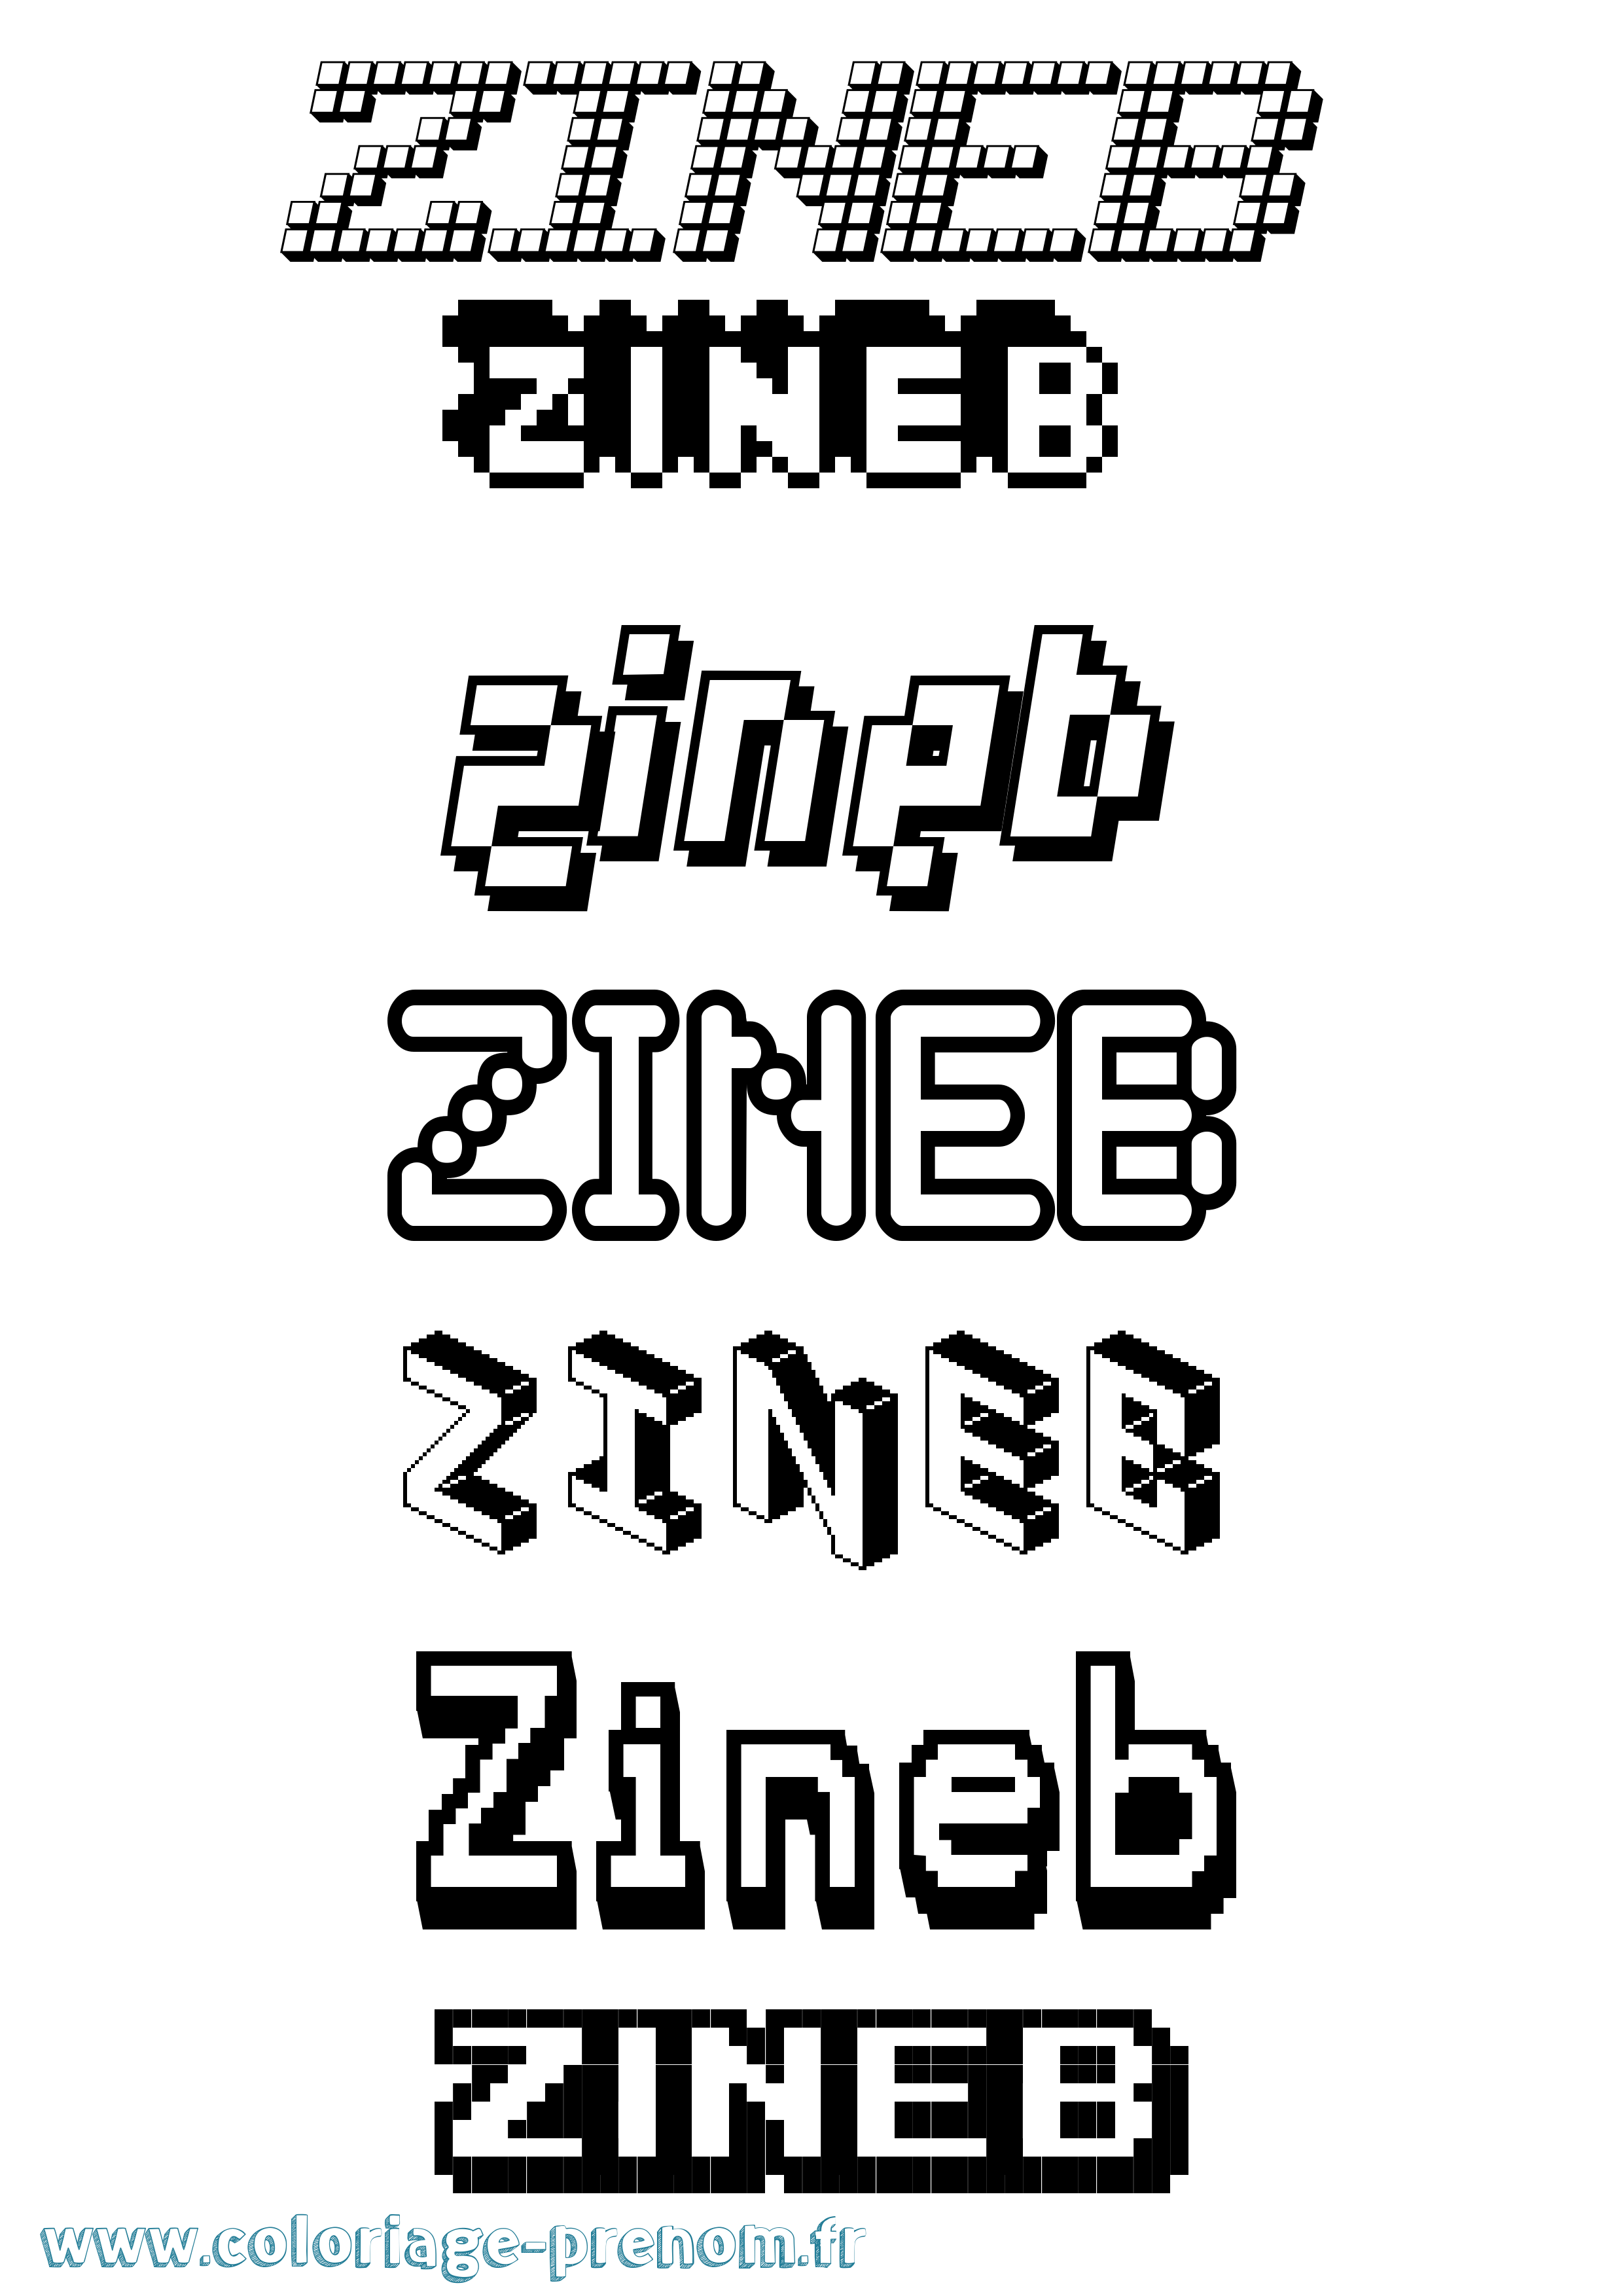 Coloriage prénom Zineb